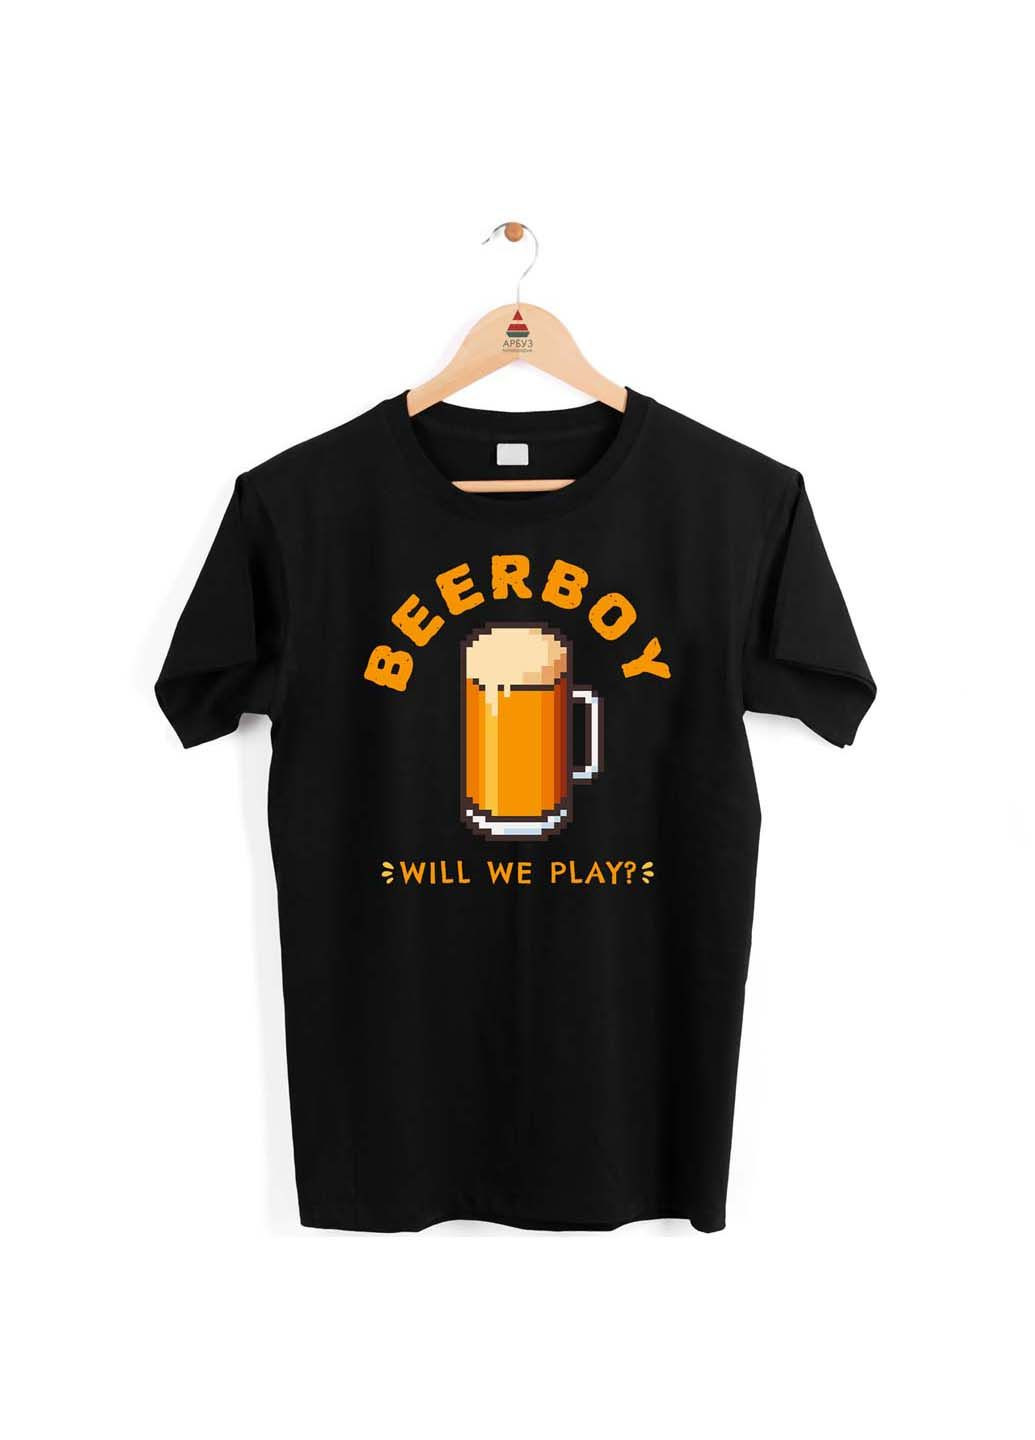 Черная футболка beerboy will we play Кавун